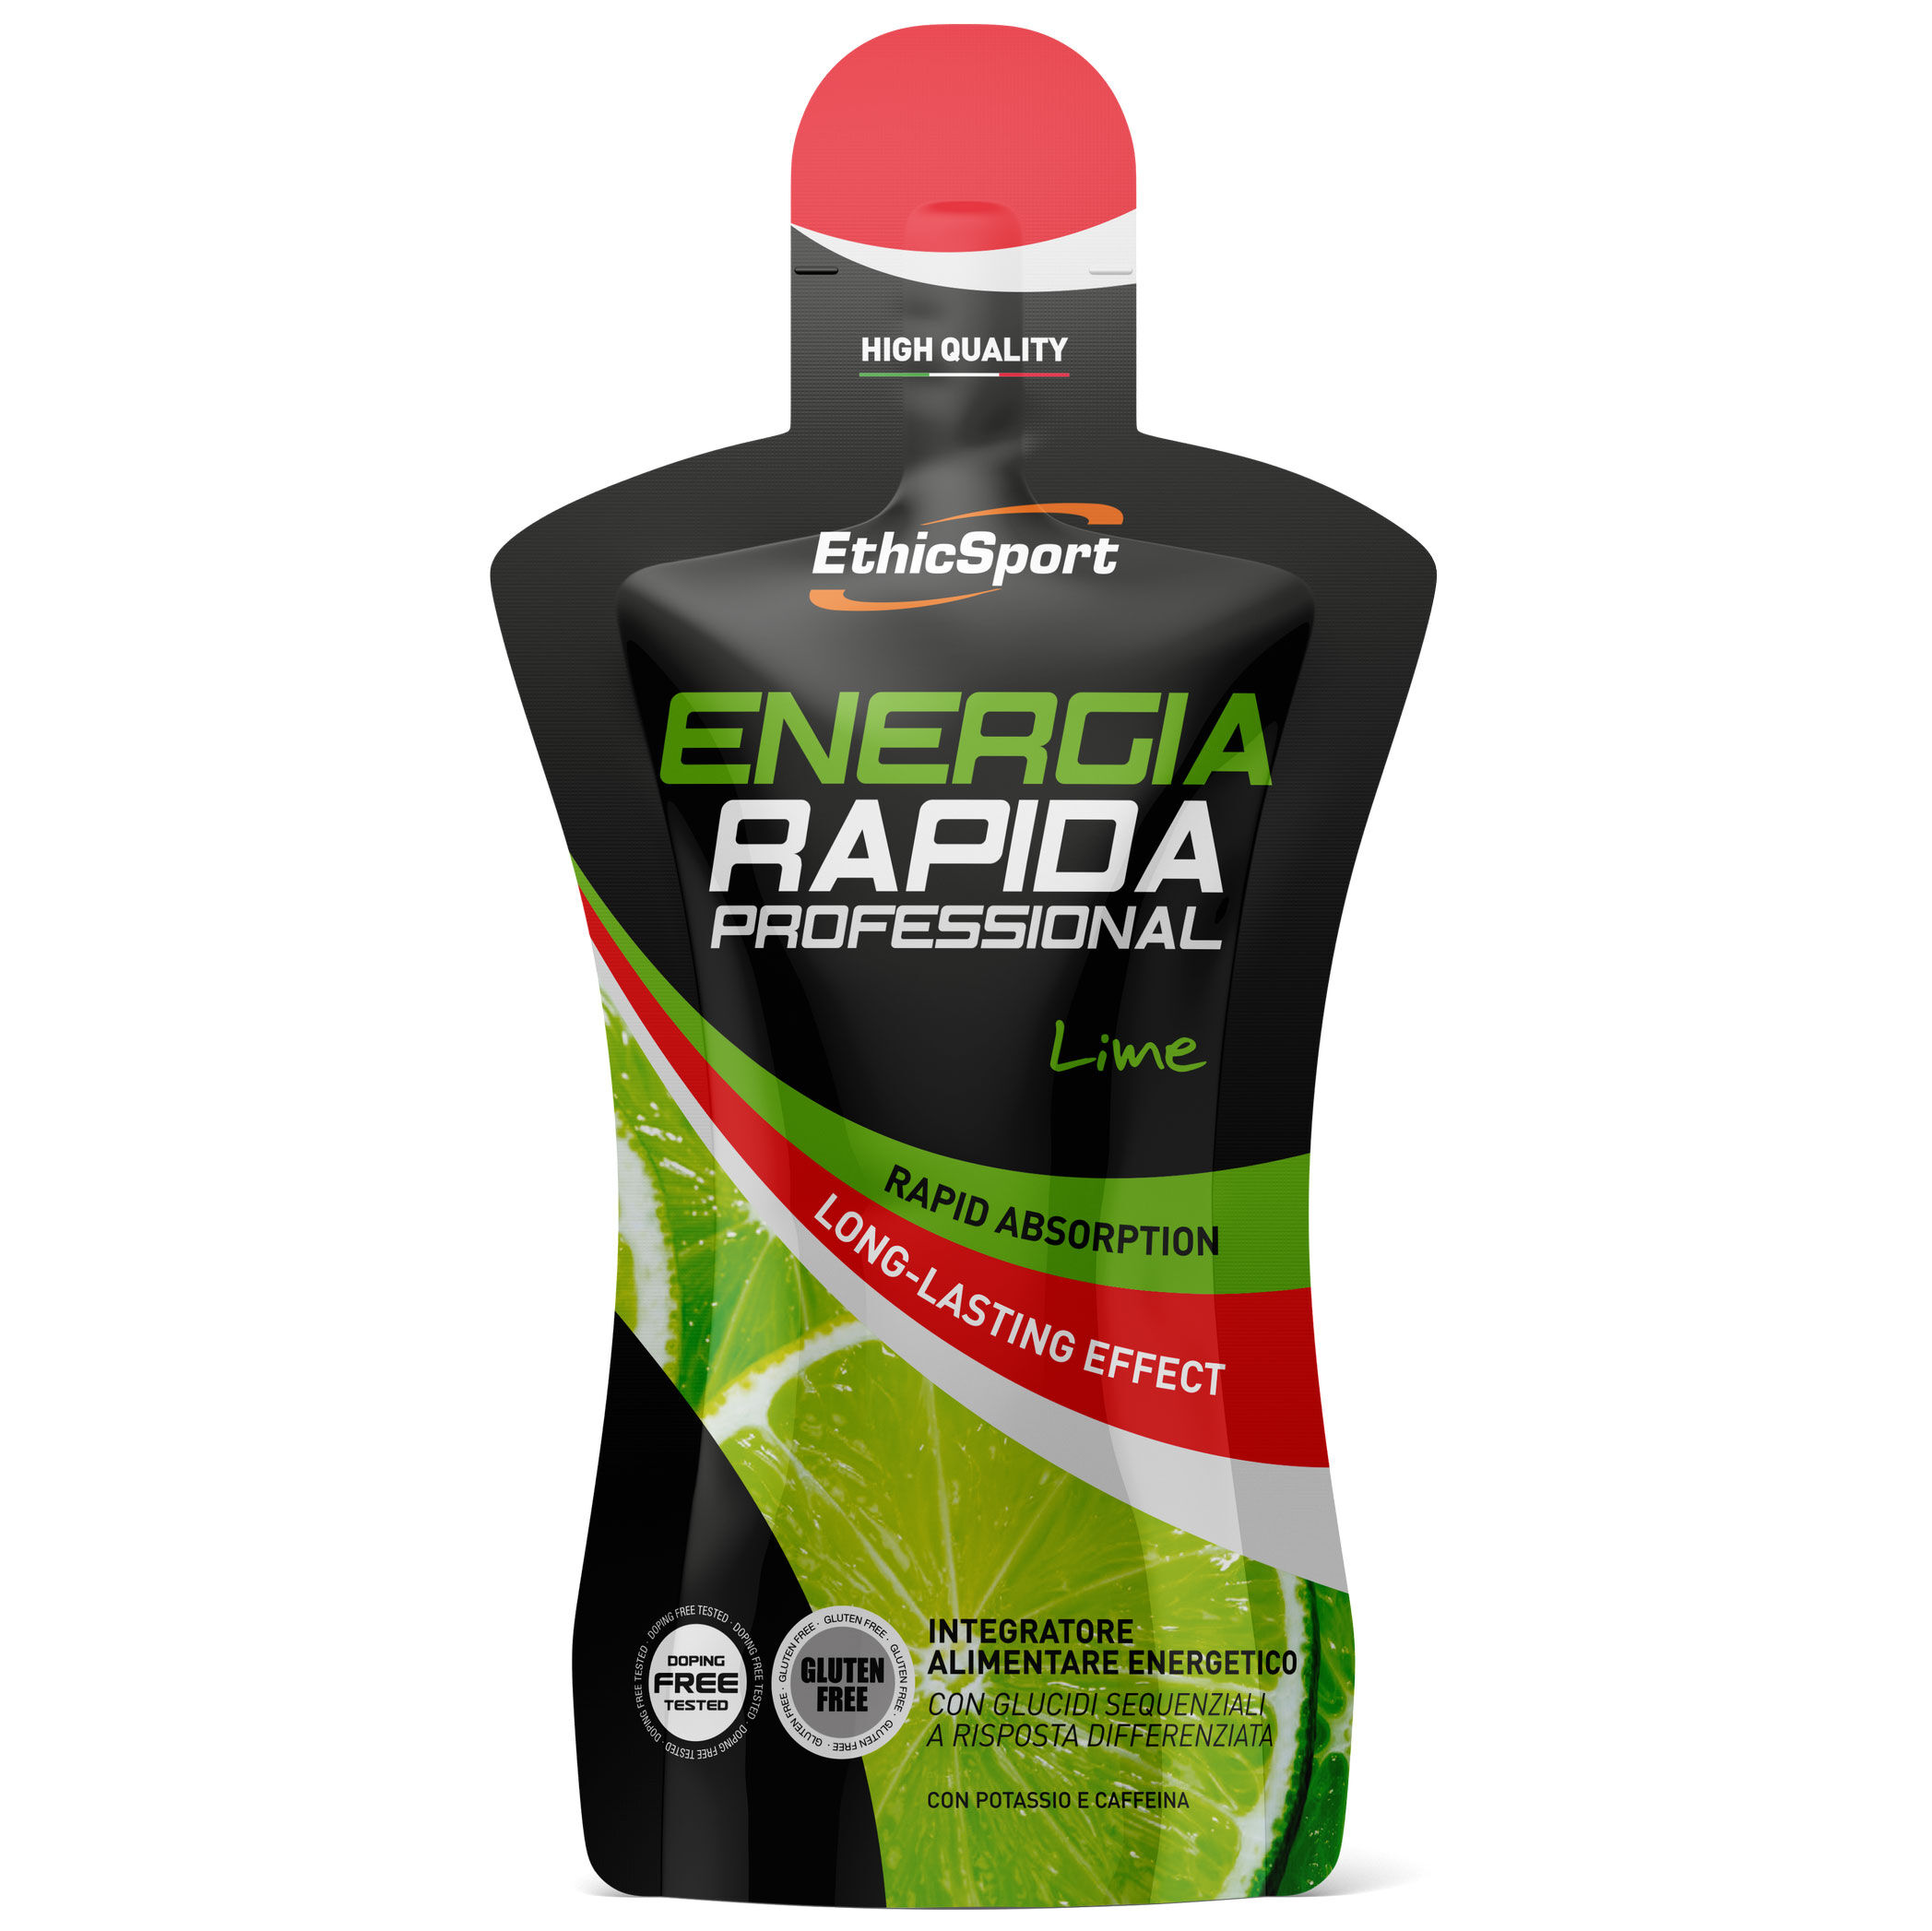 ENERGIA RAPIDA PROFESSIONAL Lime - Pack 50 ml.  